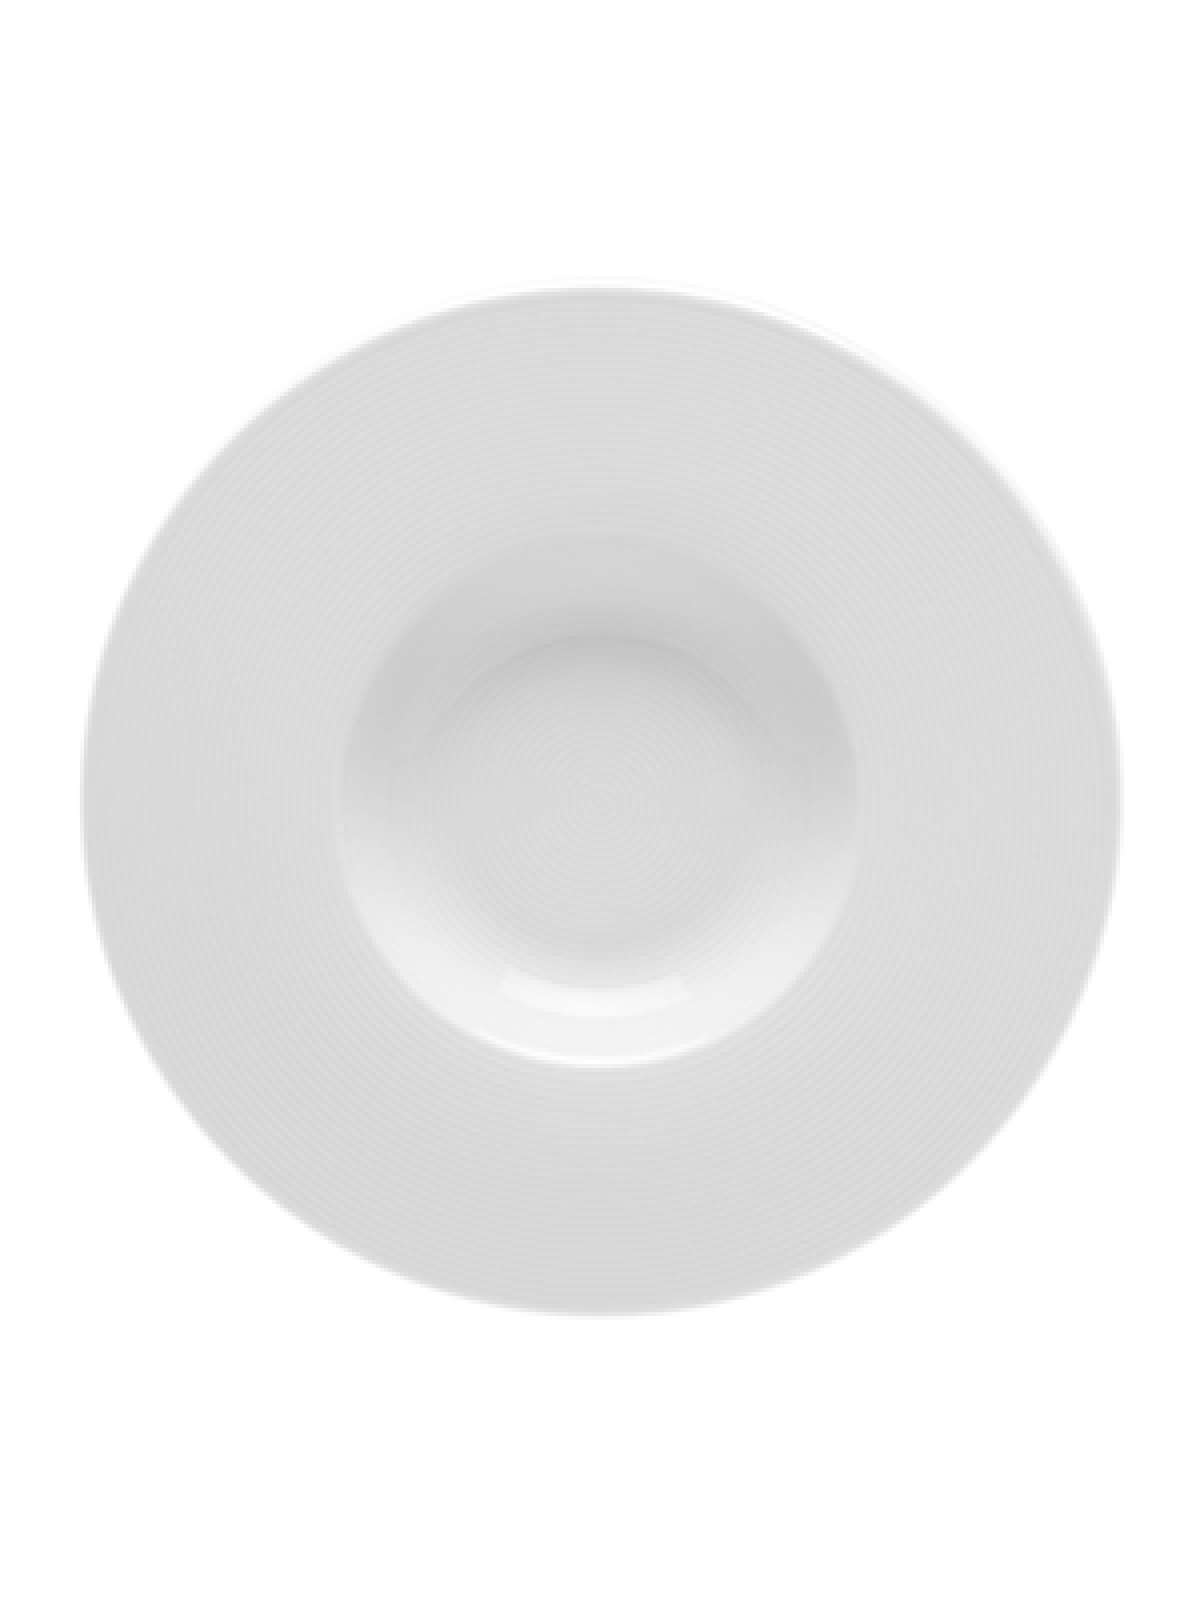 Тарелка глубокая с широким бортом Lubiana Eto круглая, 27 см